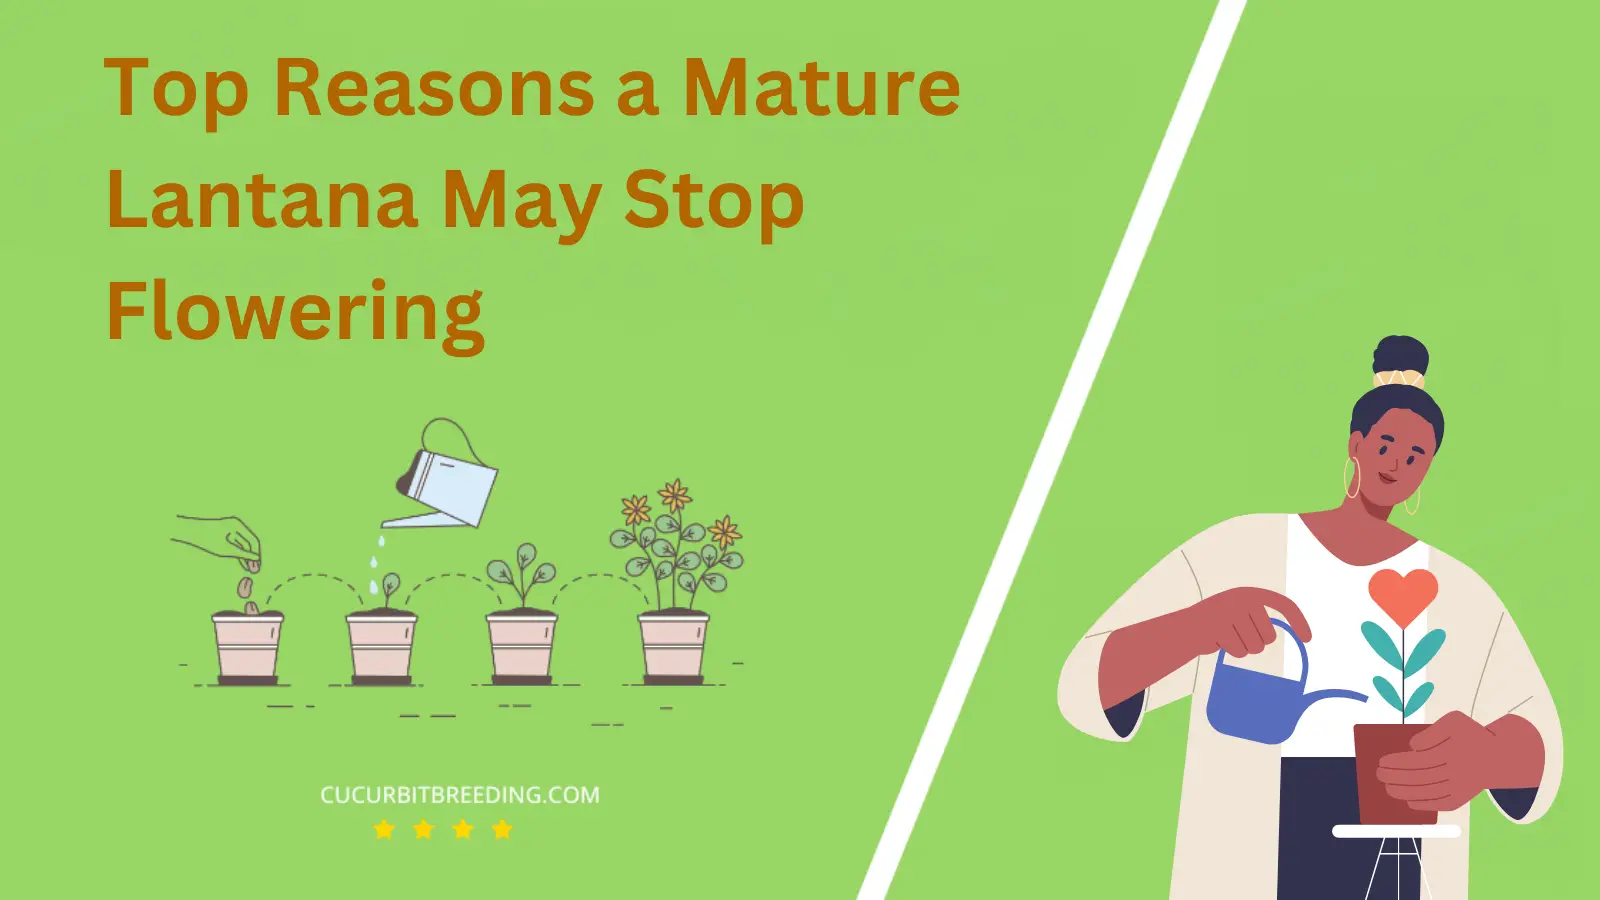 Top Reasons a Mature Lantana May Stop Flowering